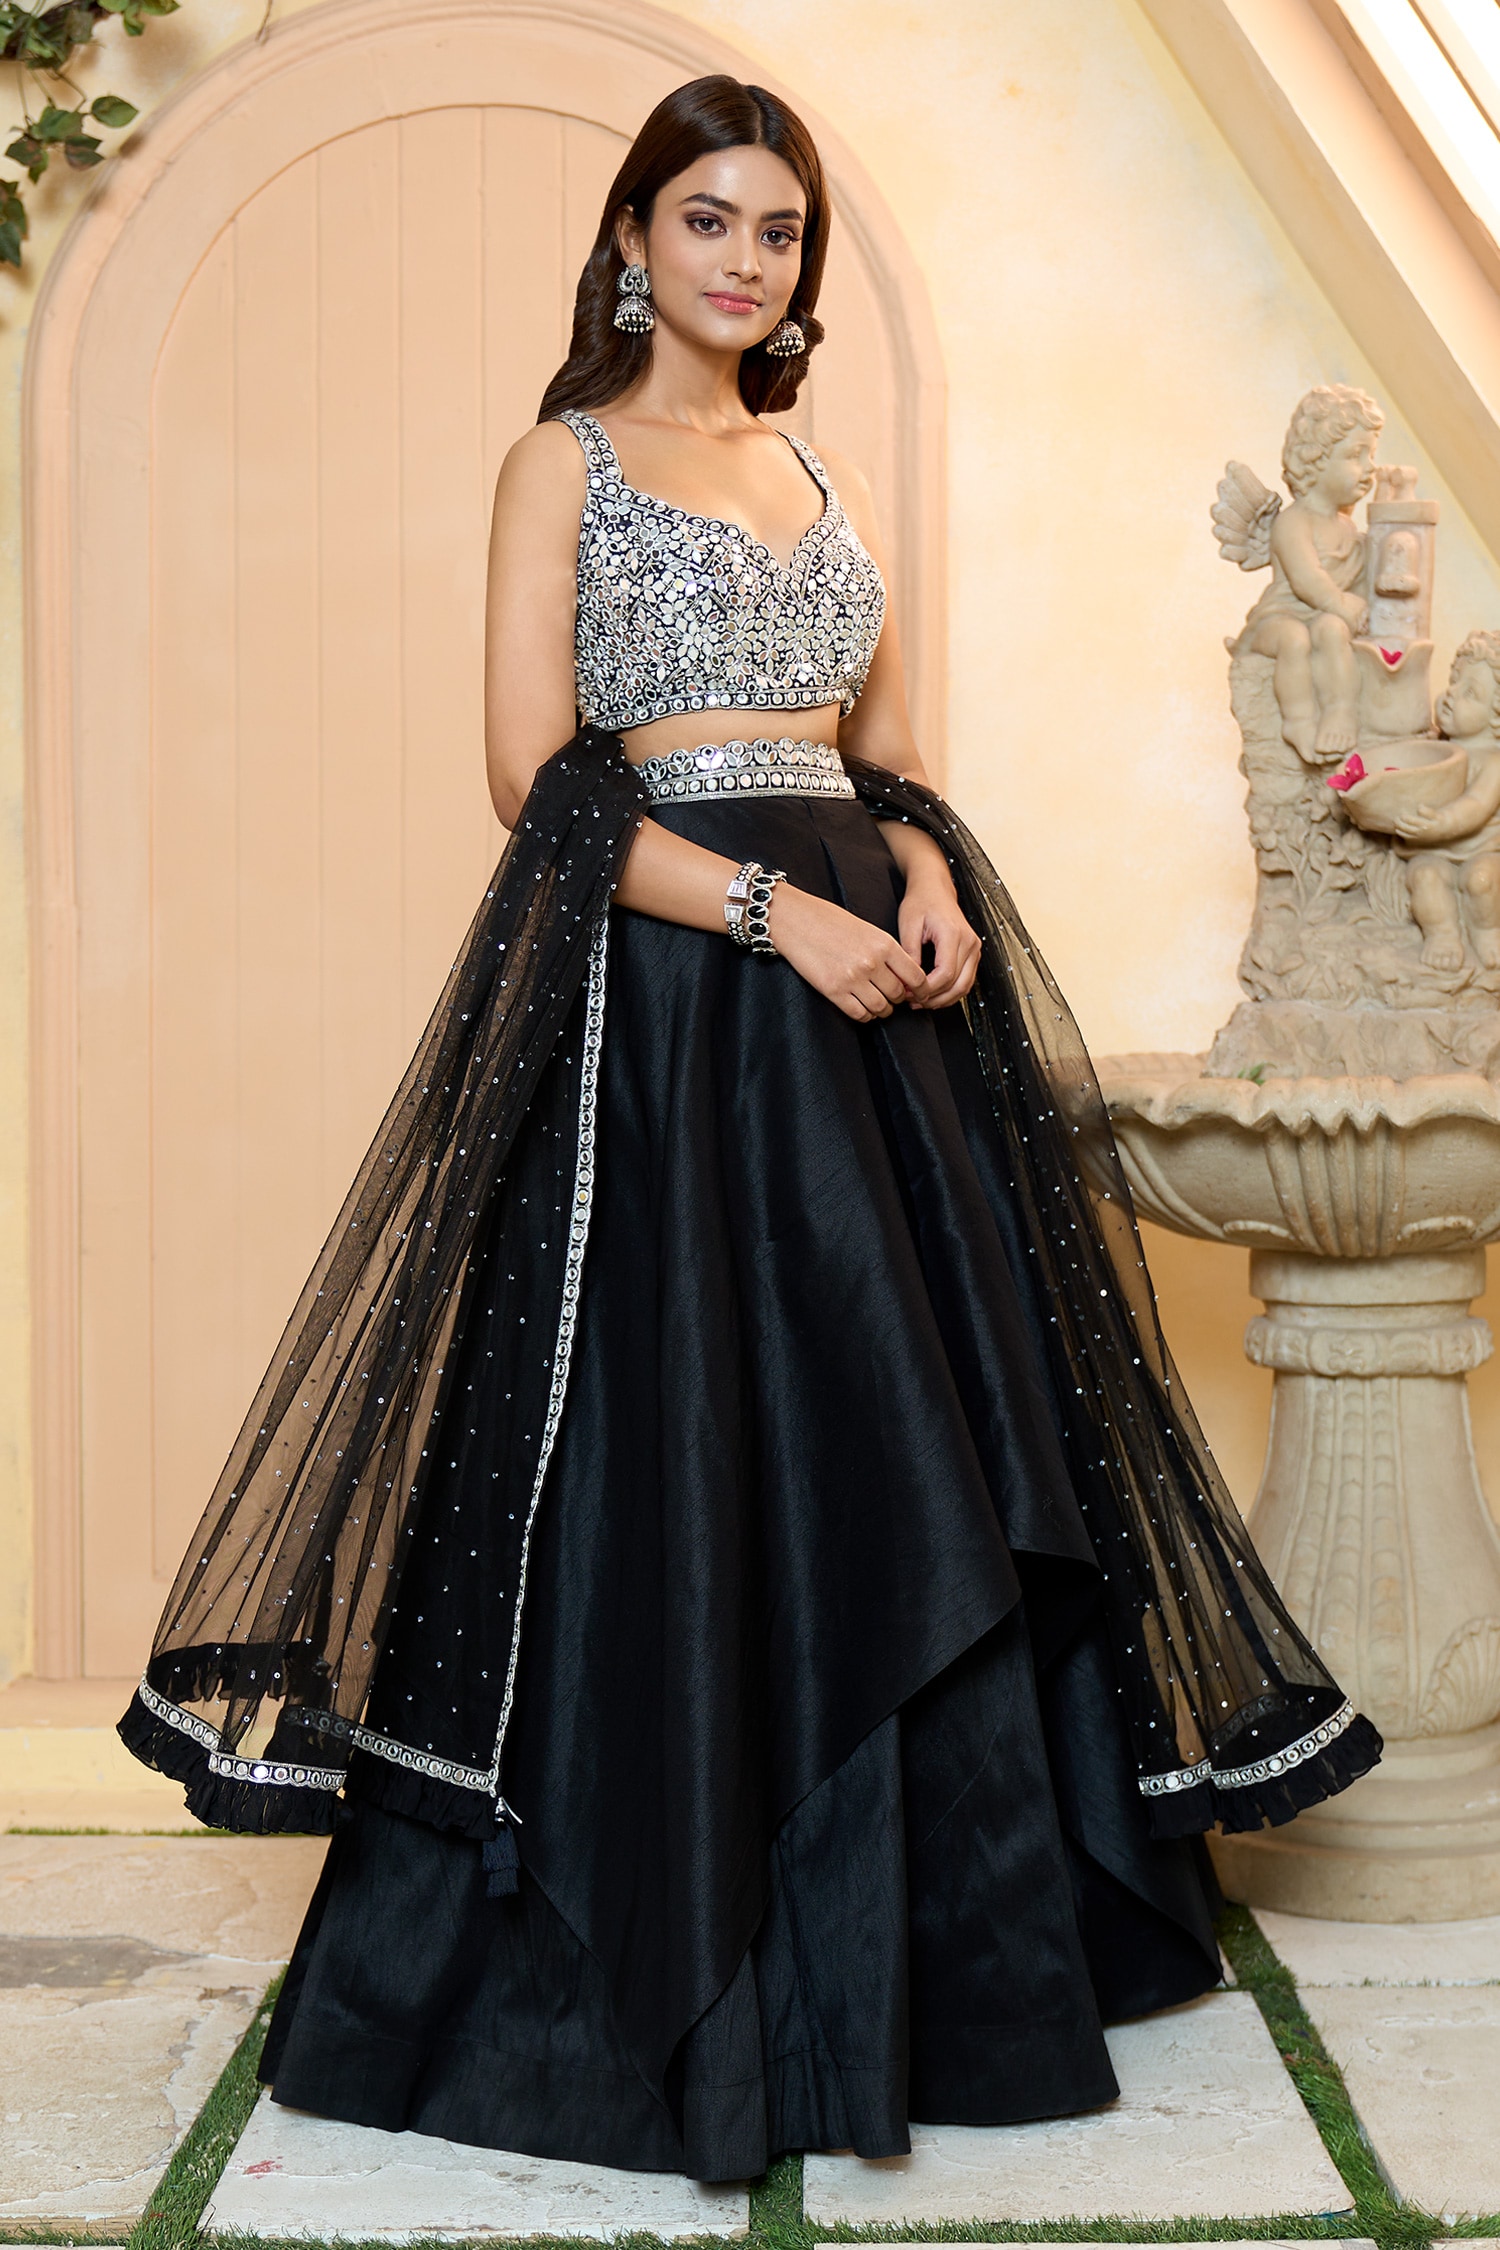 Aditi Rao Hydari exudes royalty vibes in all black ensemble